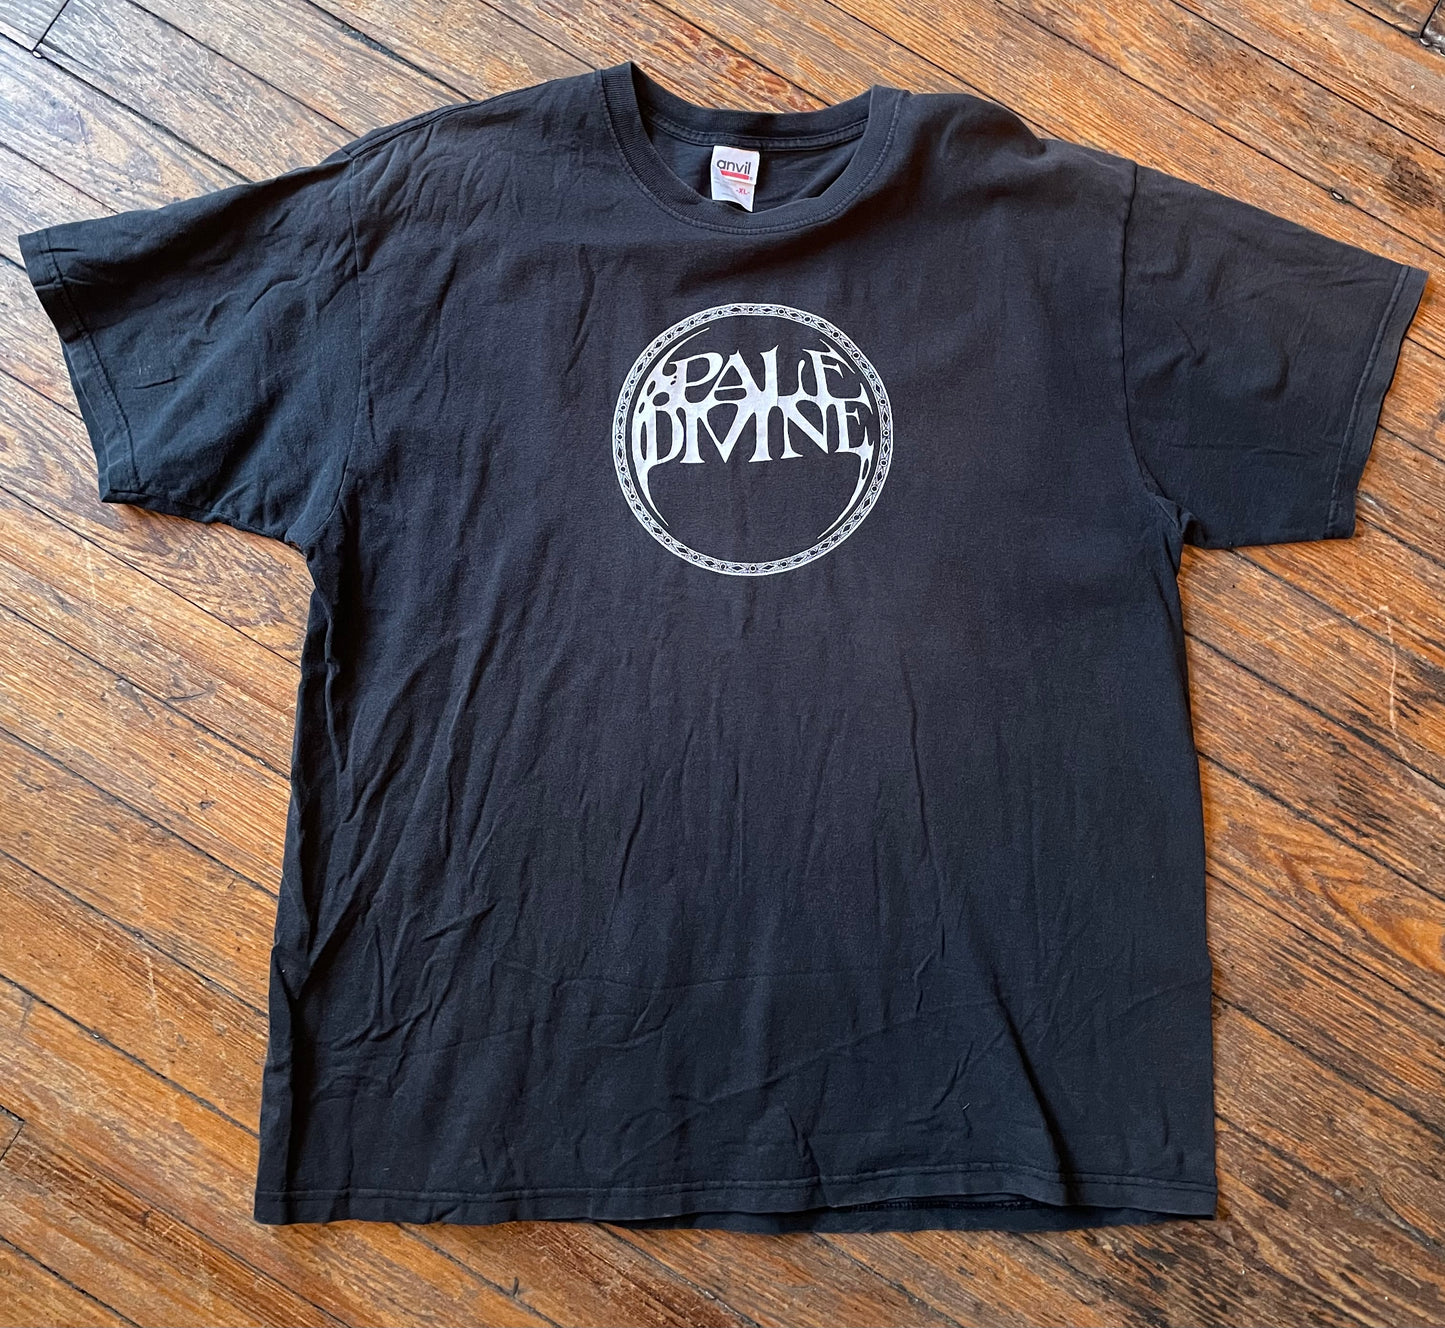 Vintage Pale Divine Doom Metal T-Shirt